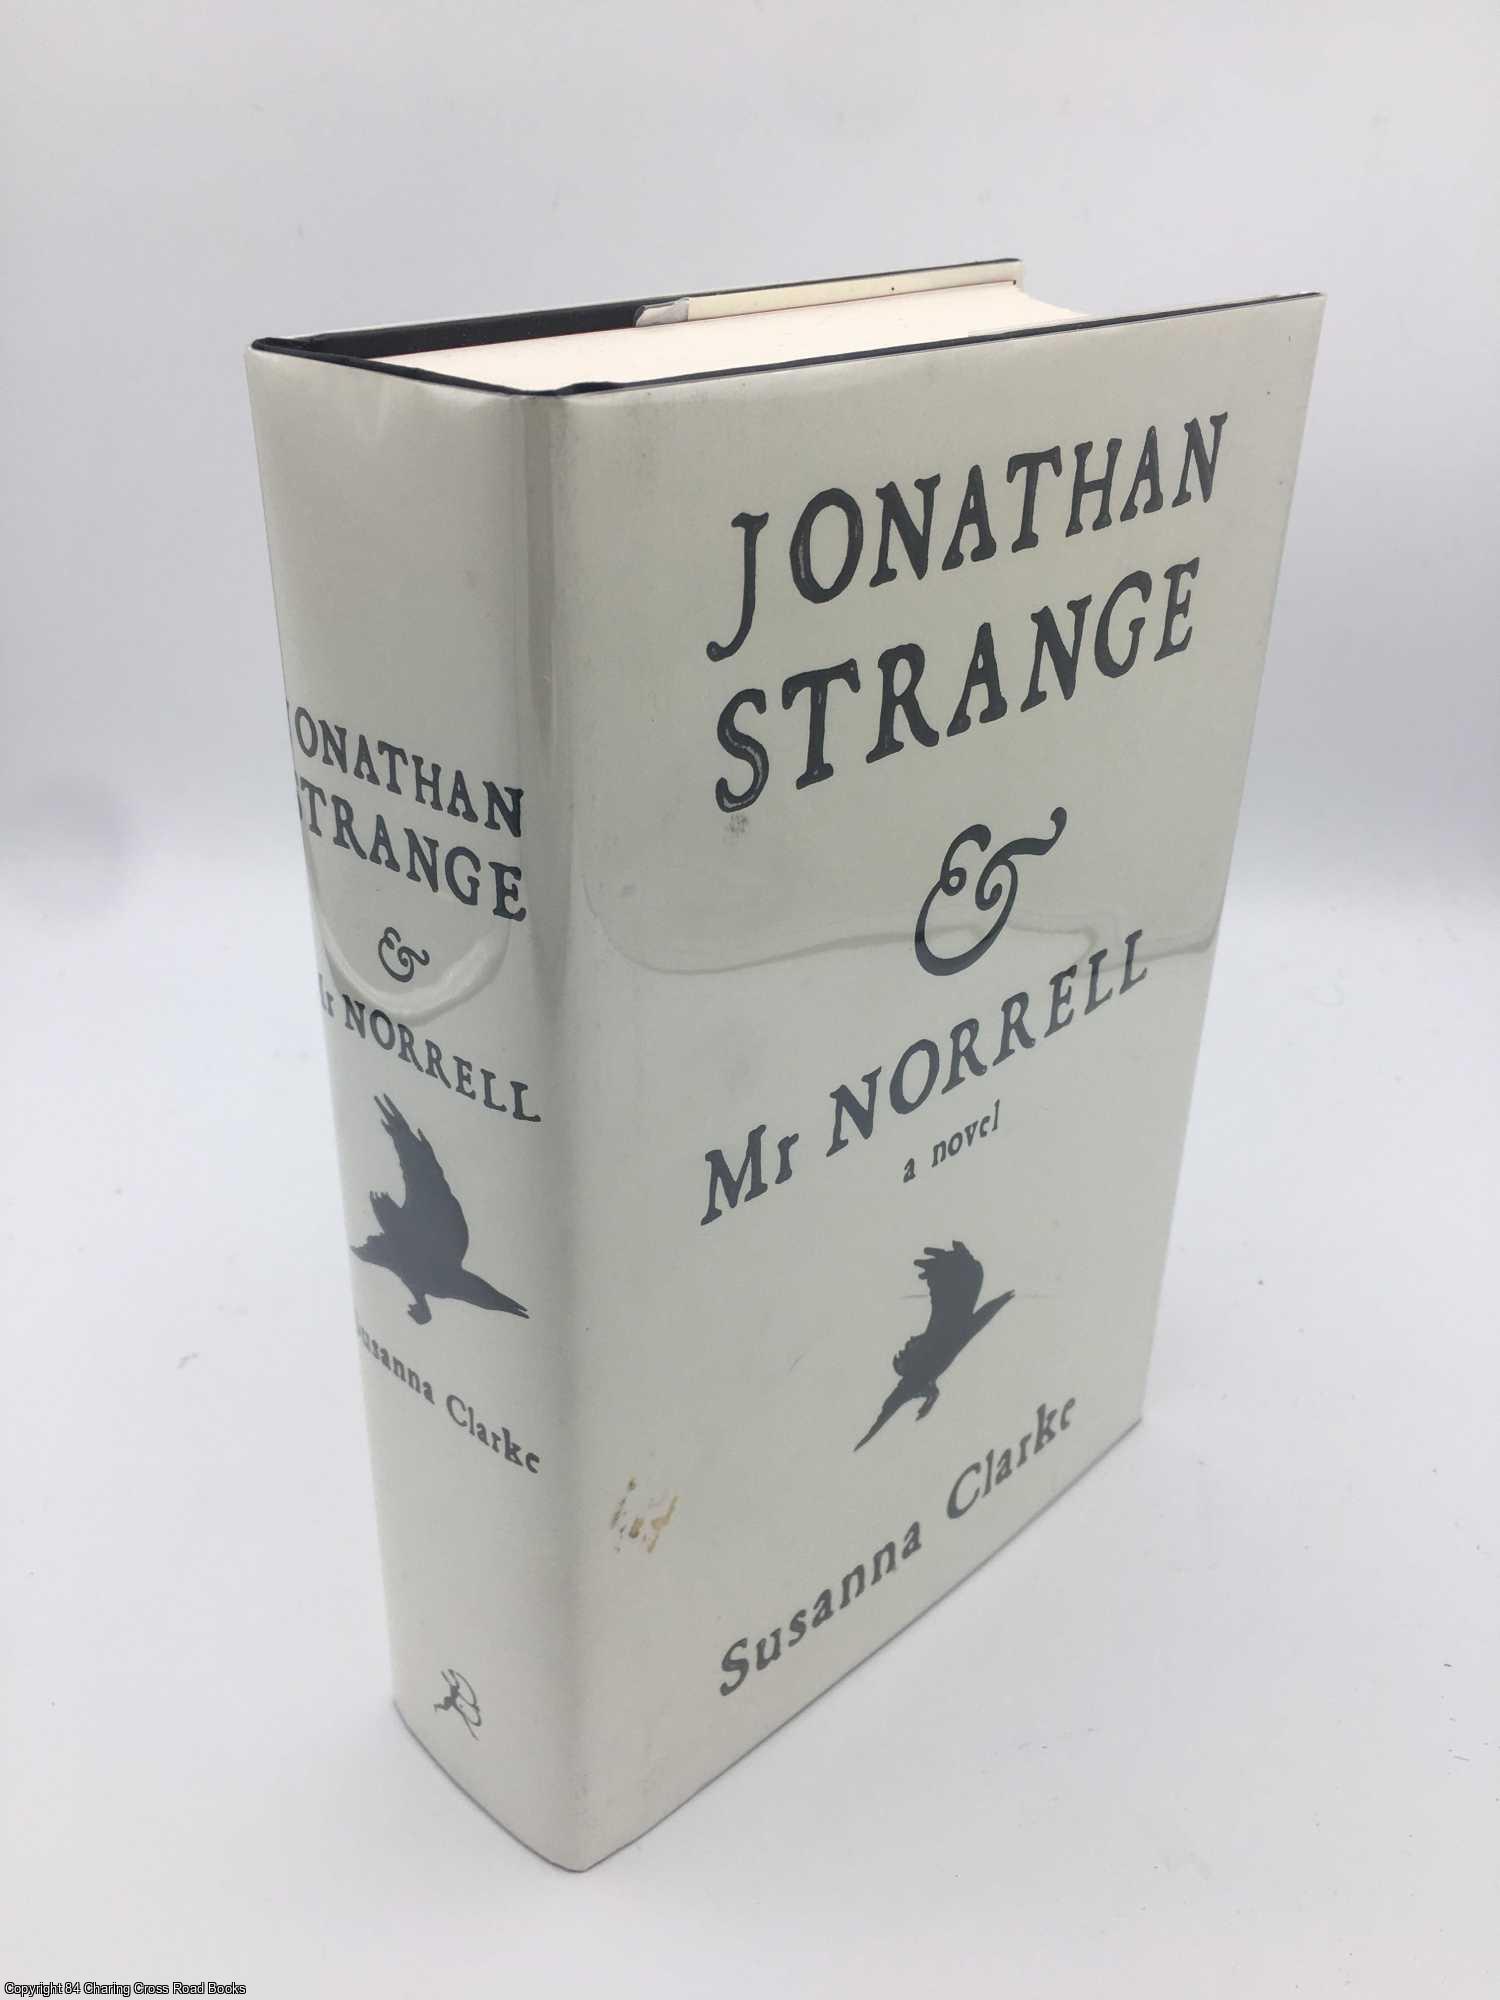 Clarke, Susanna - Jonathan Strange & Mr. Norrell